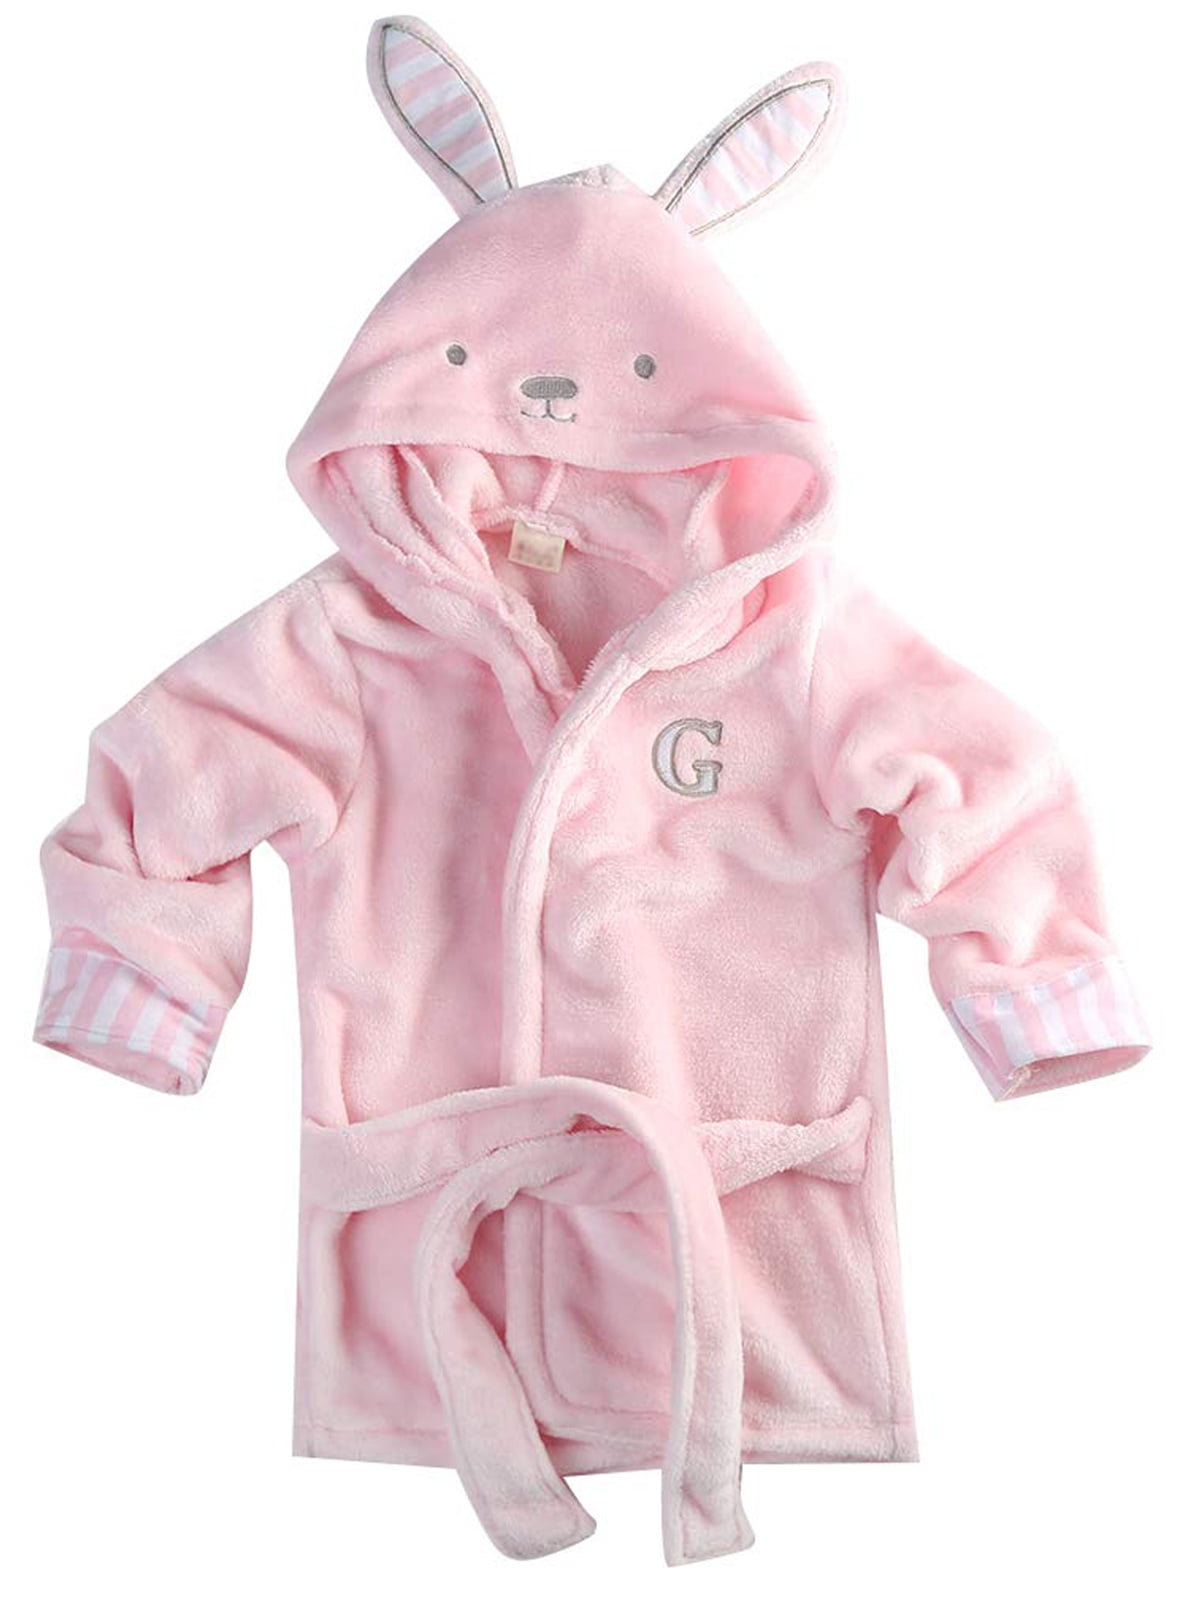 Baby Cartoon Animal Style Bath Robes Toddler Unisex Kids Hooded Tower Pajamas 